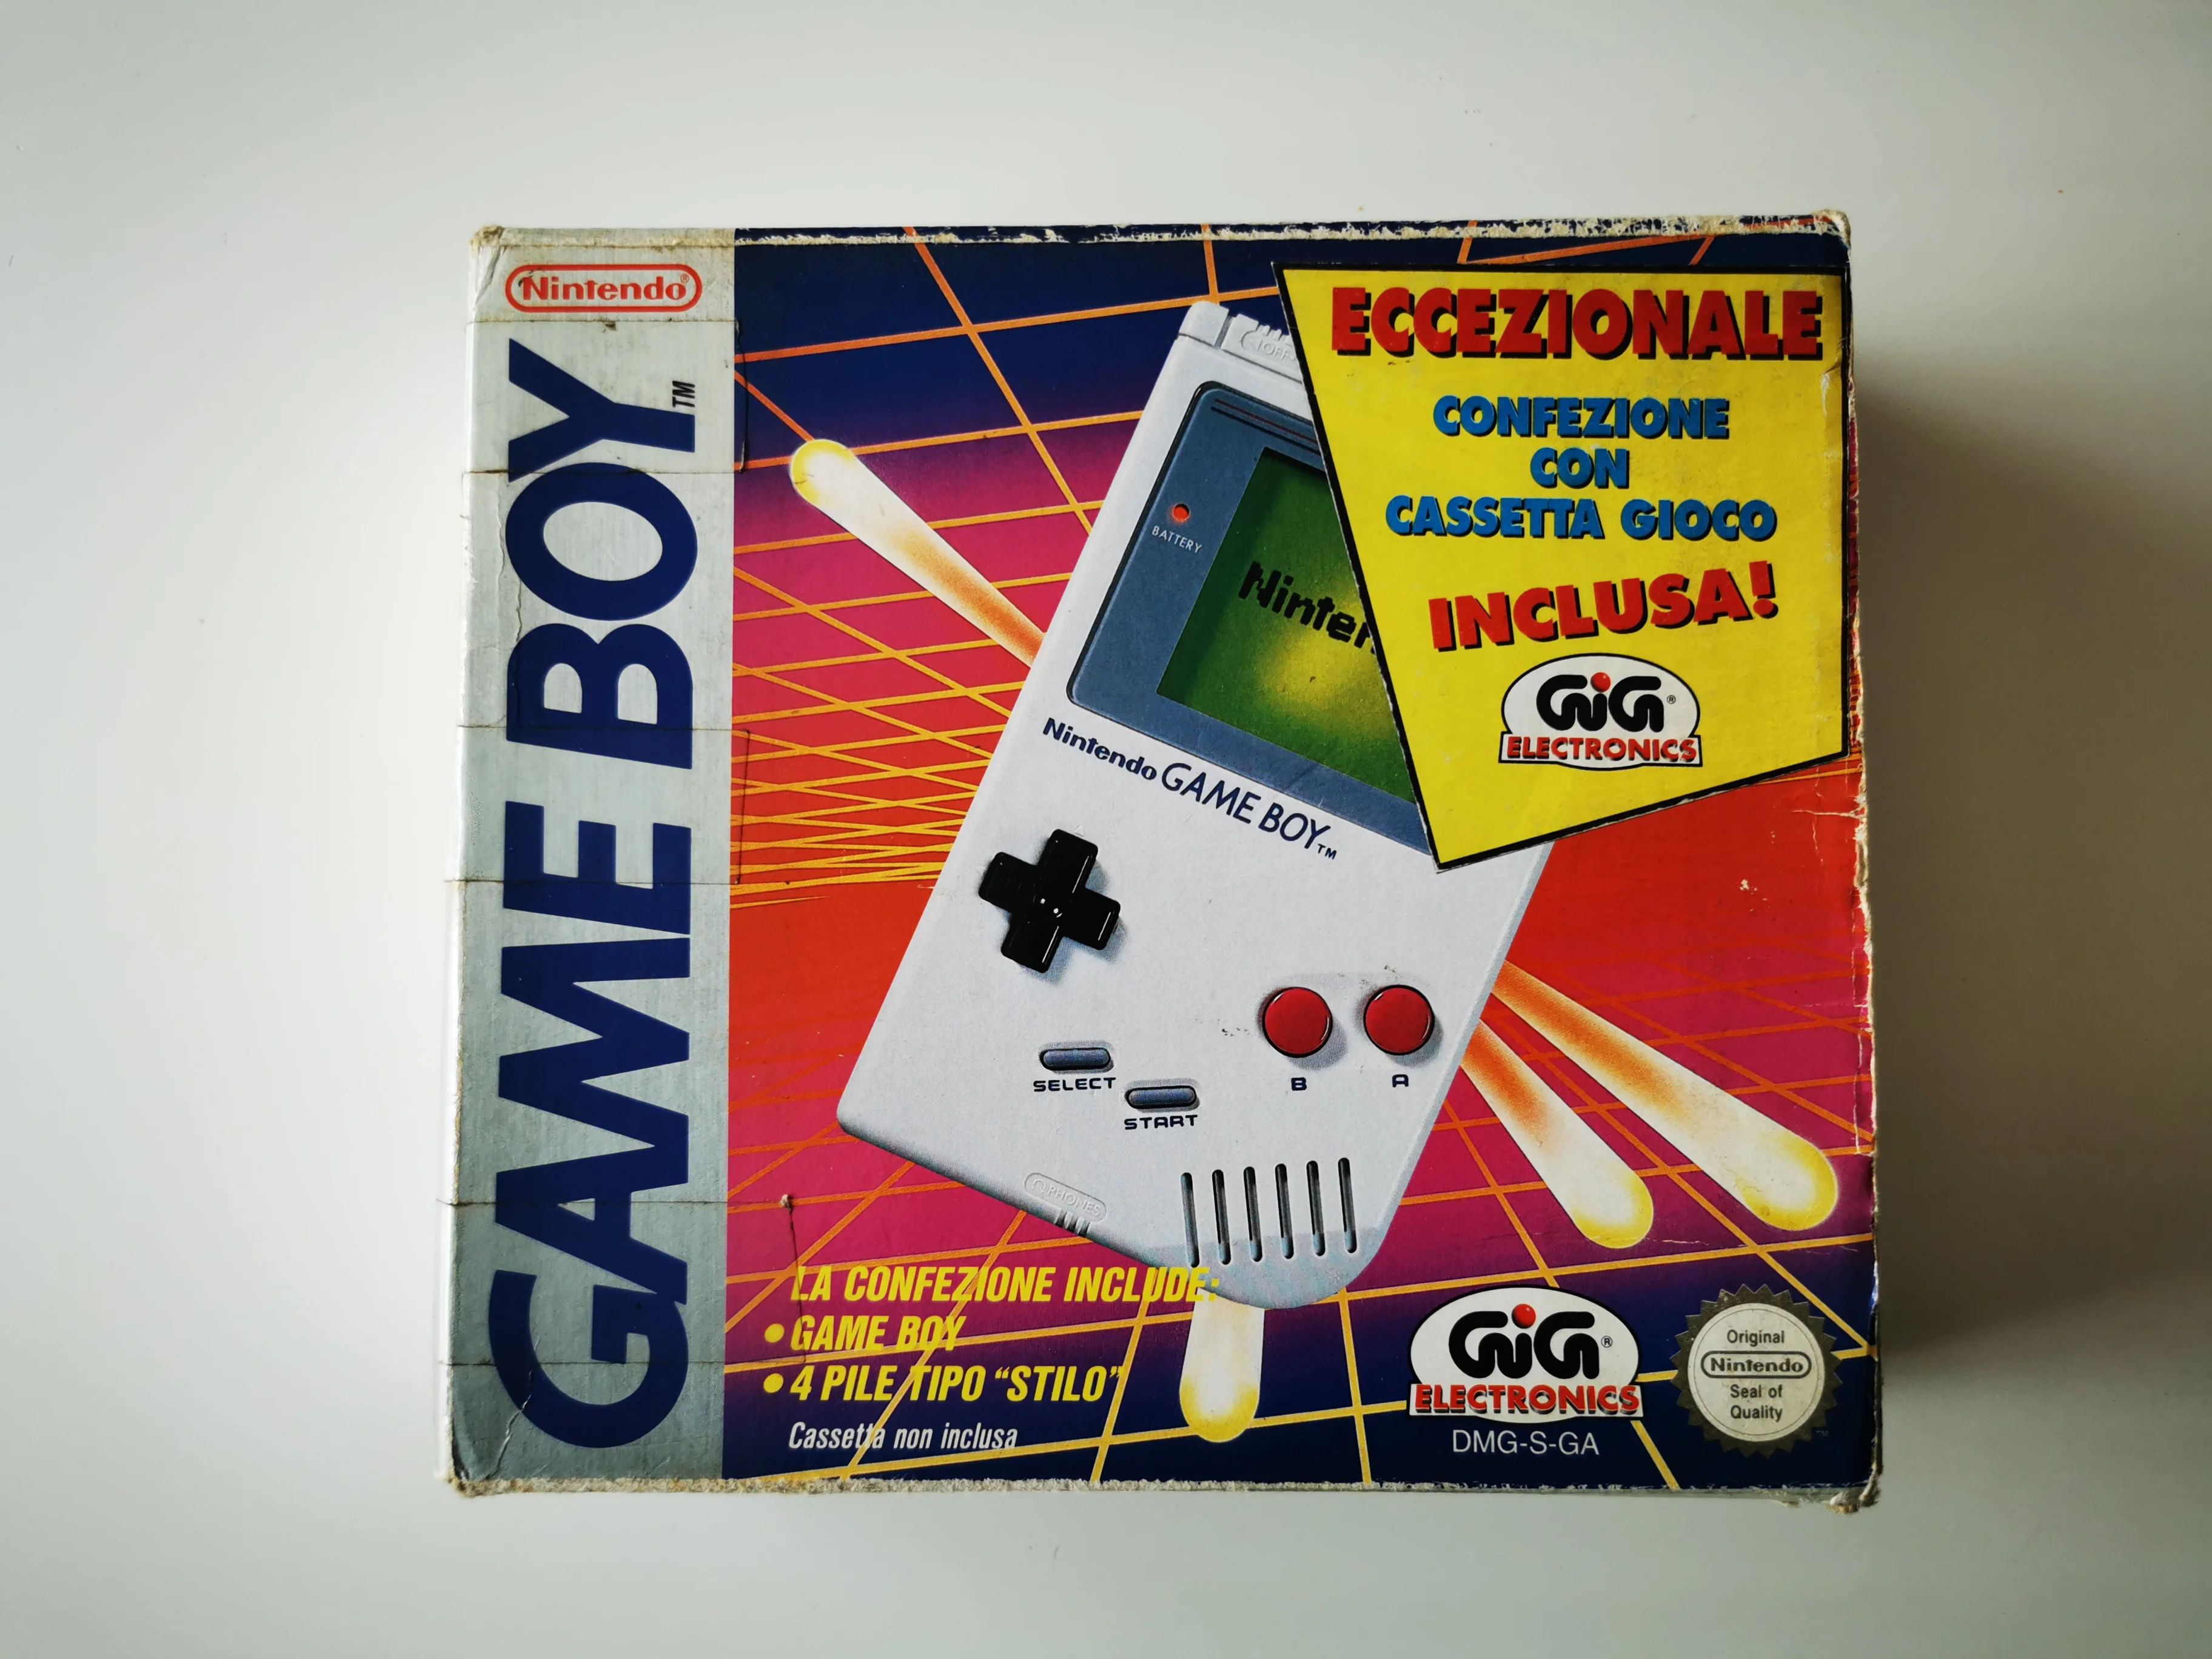  Nintendo Game Boy Console [IT]